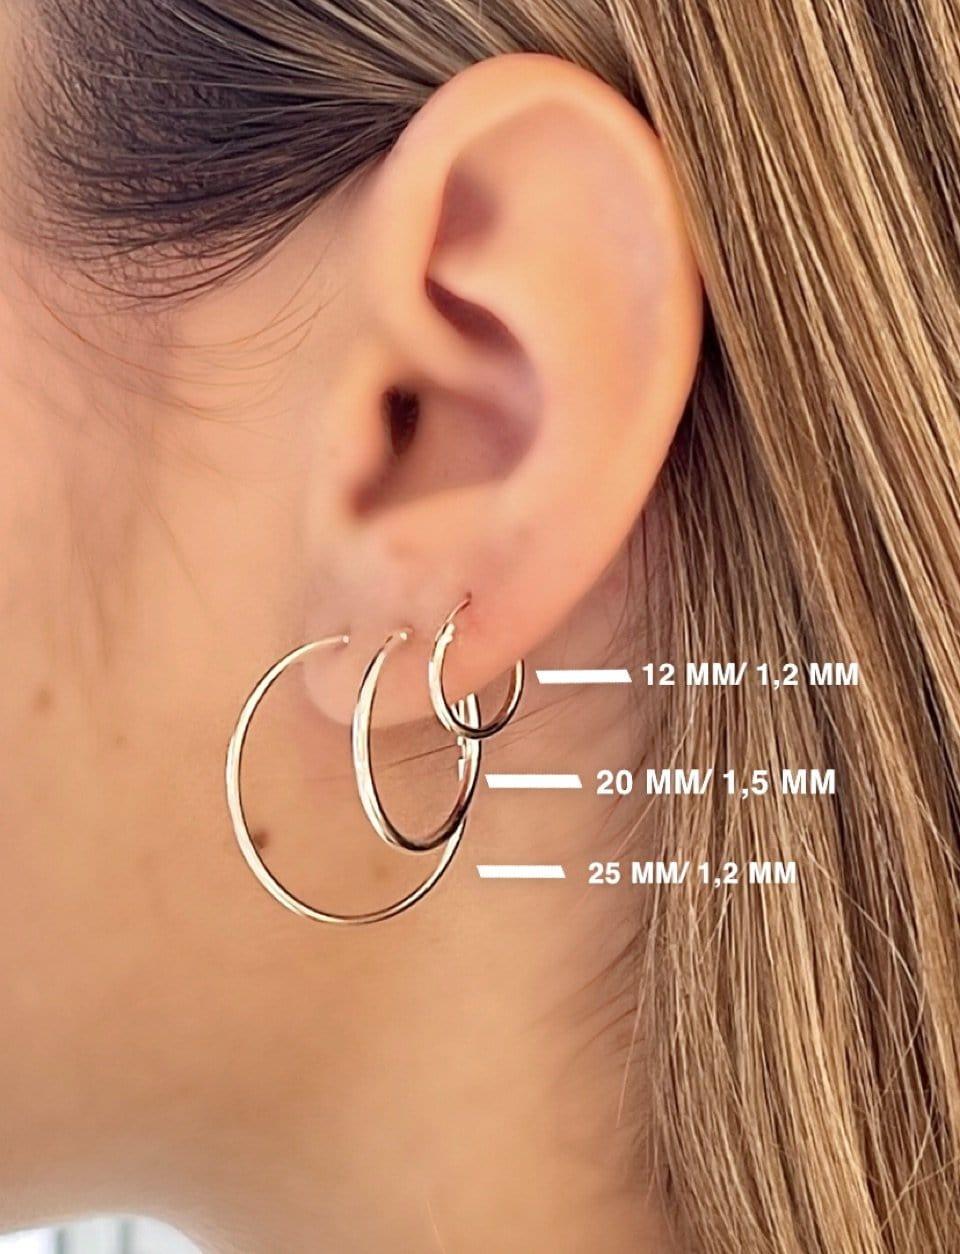 Silver Hoop Earrings 25 MM 1,2MM - Juulry.com